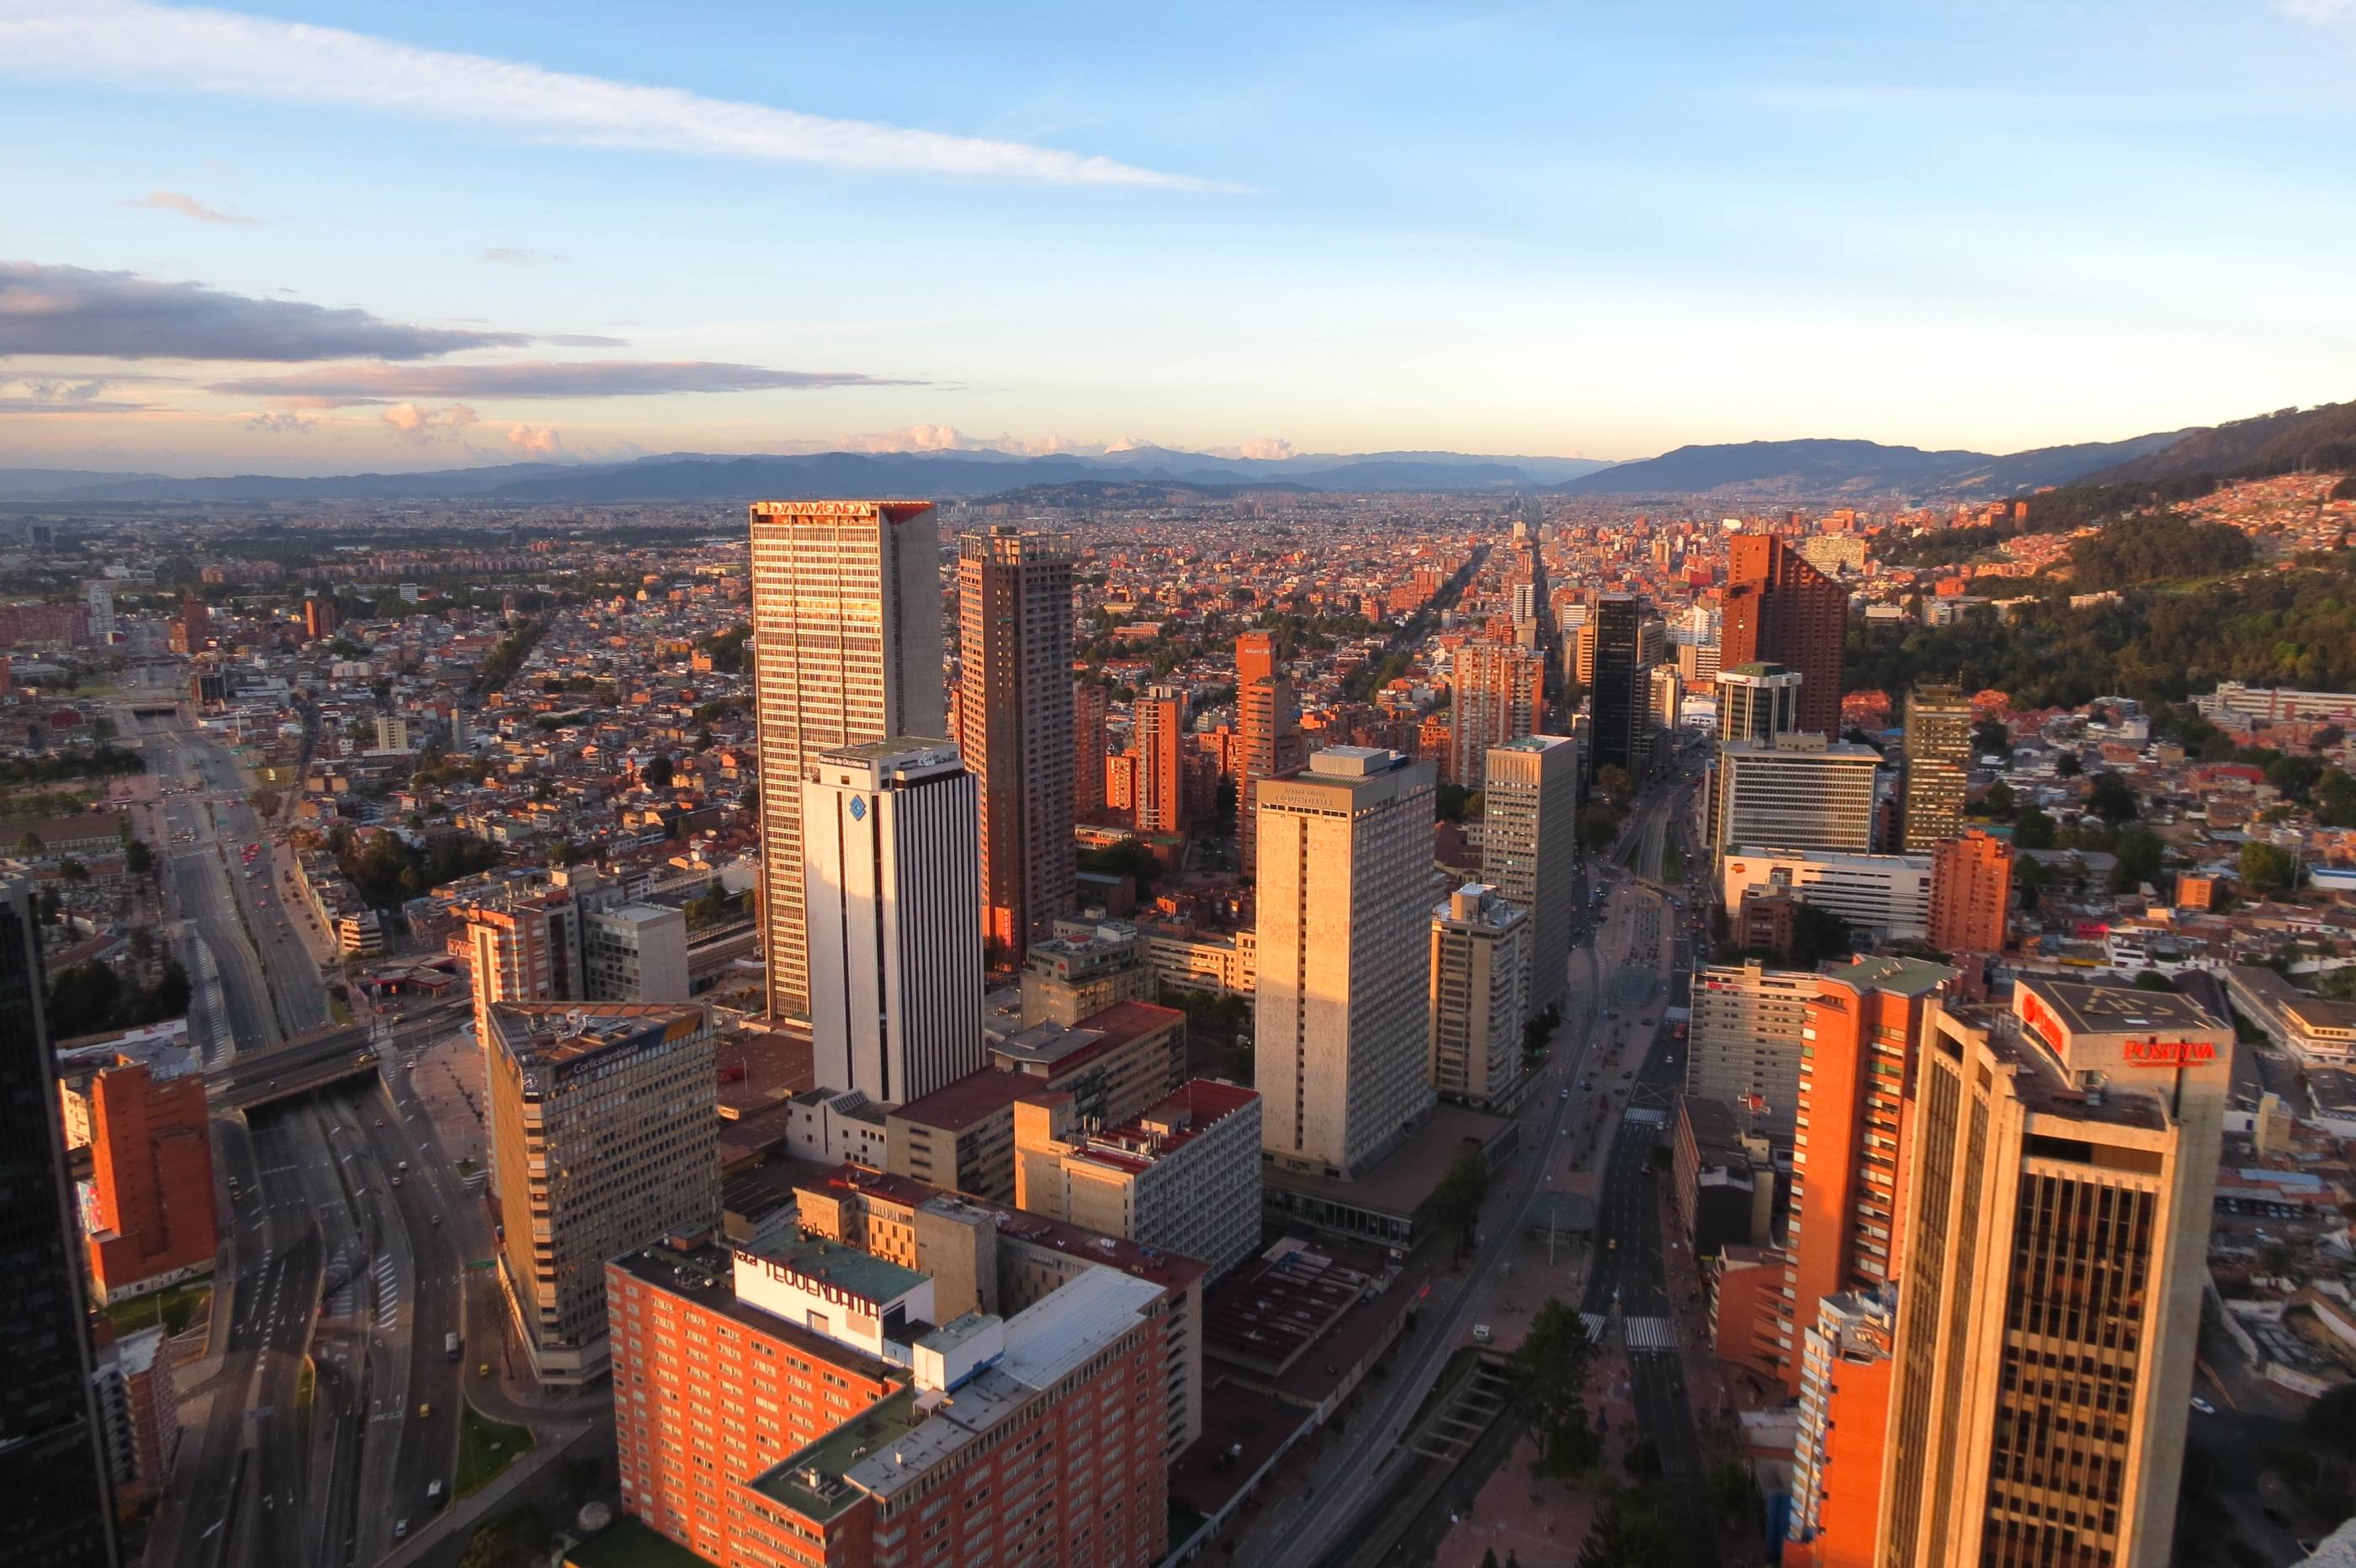 Le nord de Bogota depuis le mirador de la Torre Colpatria.